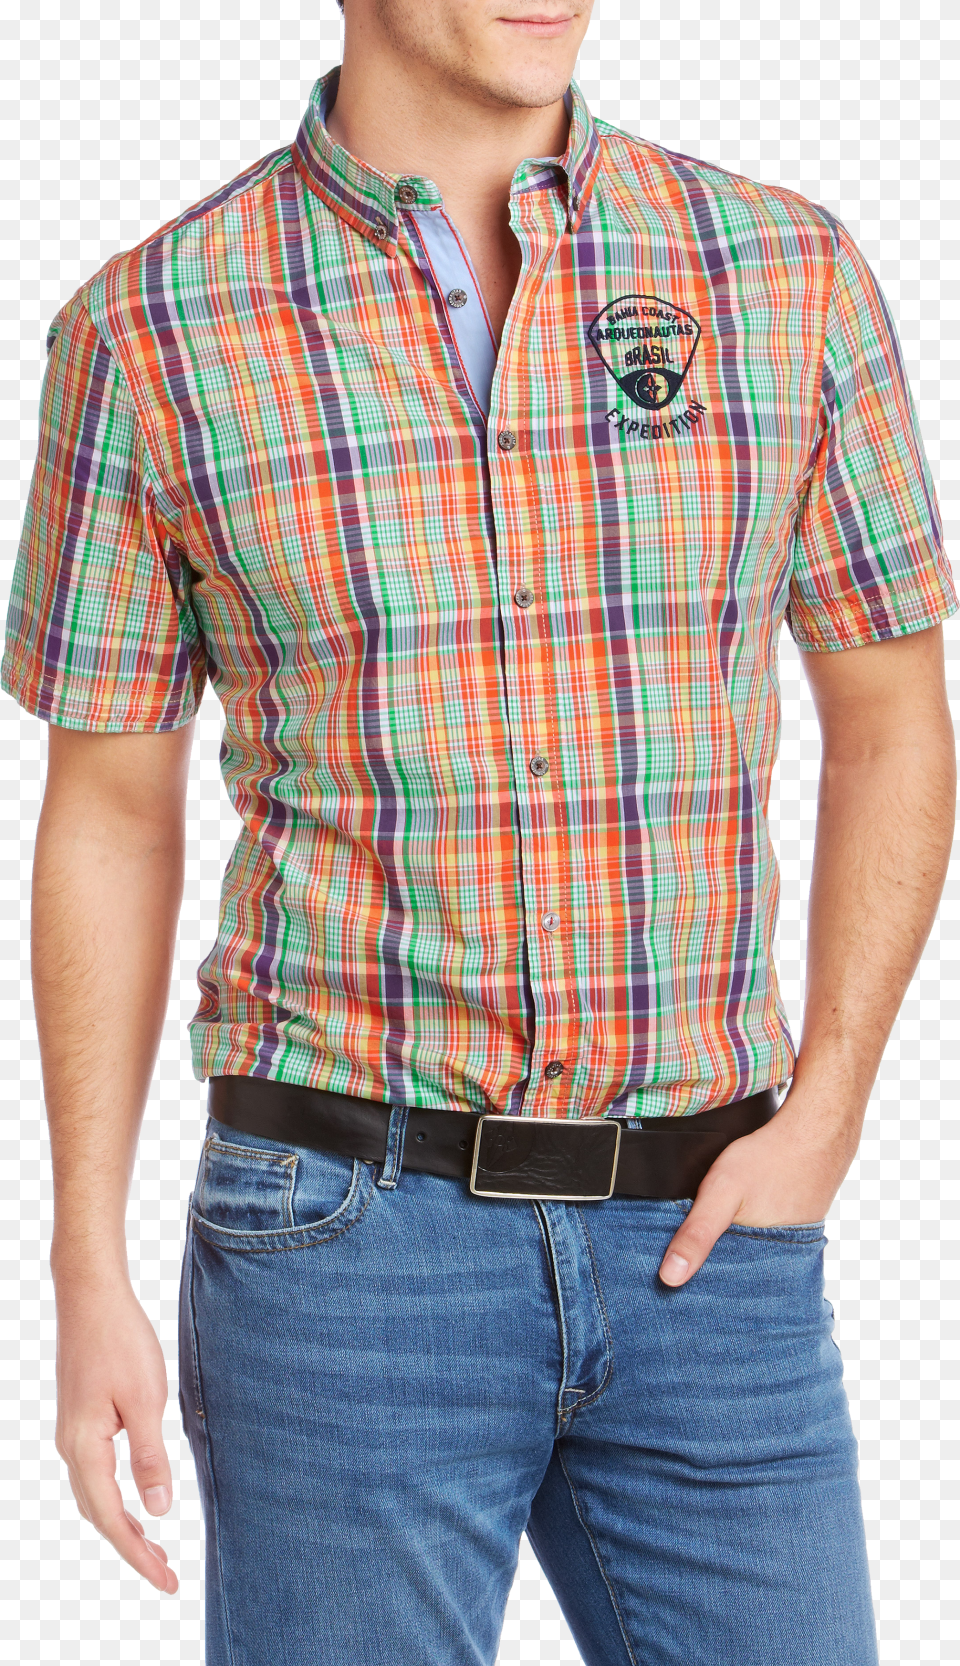 Men S Polo Shirt Image Transparent Background Men Clothes, Clothing, Jeans, Pants, Accessories Free Png